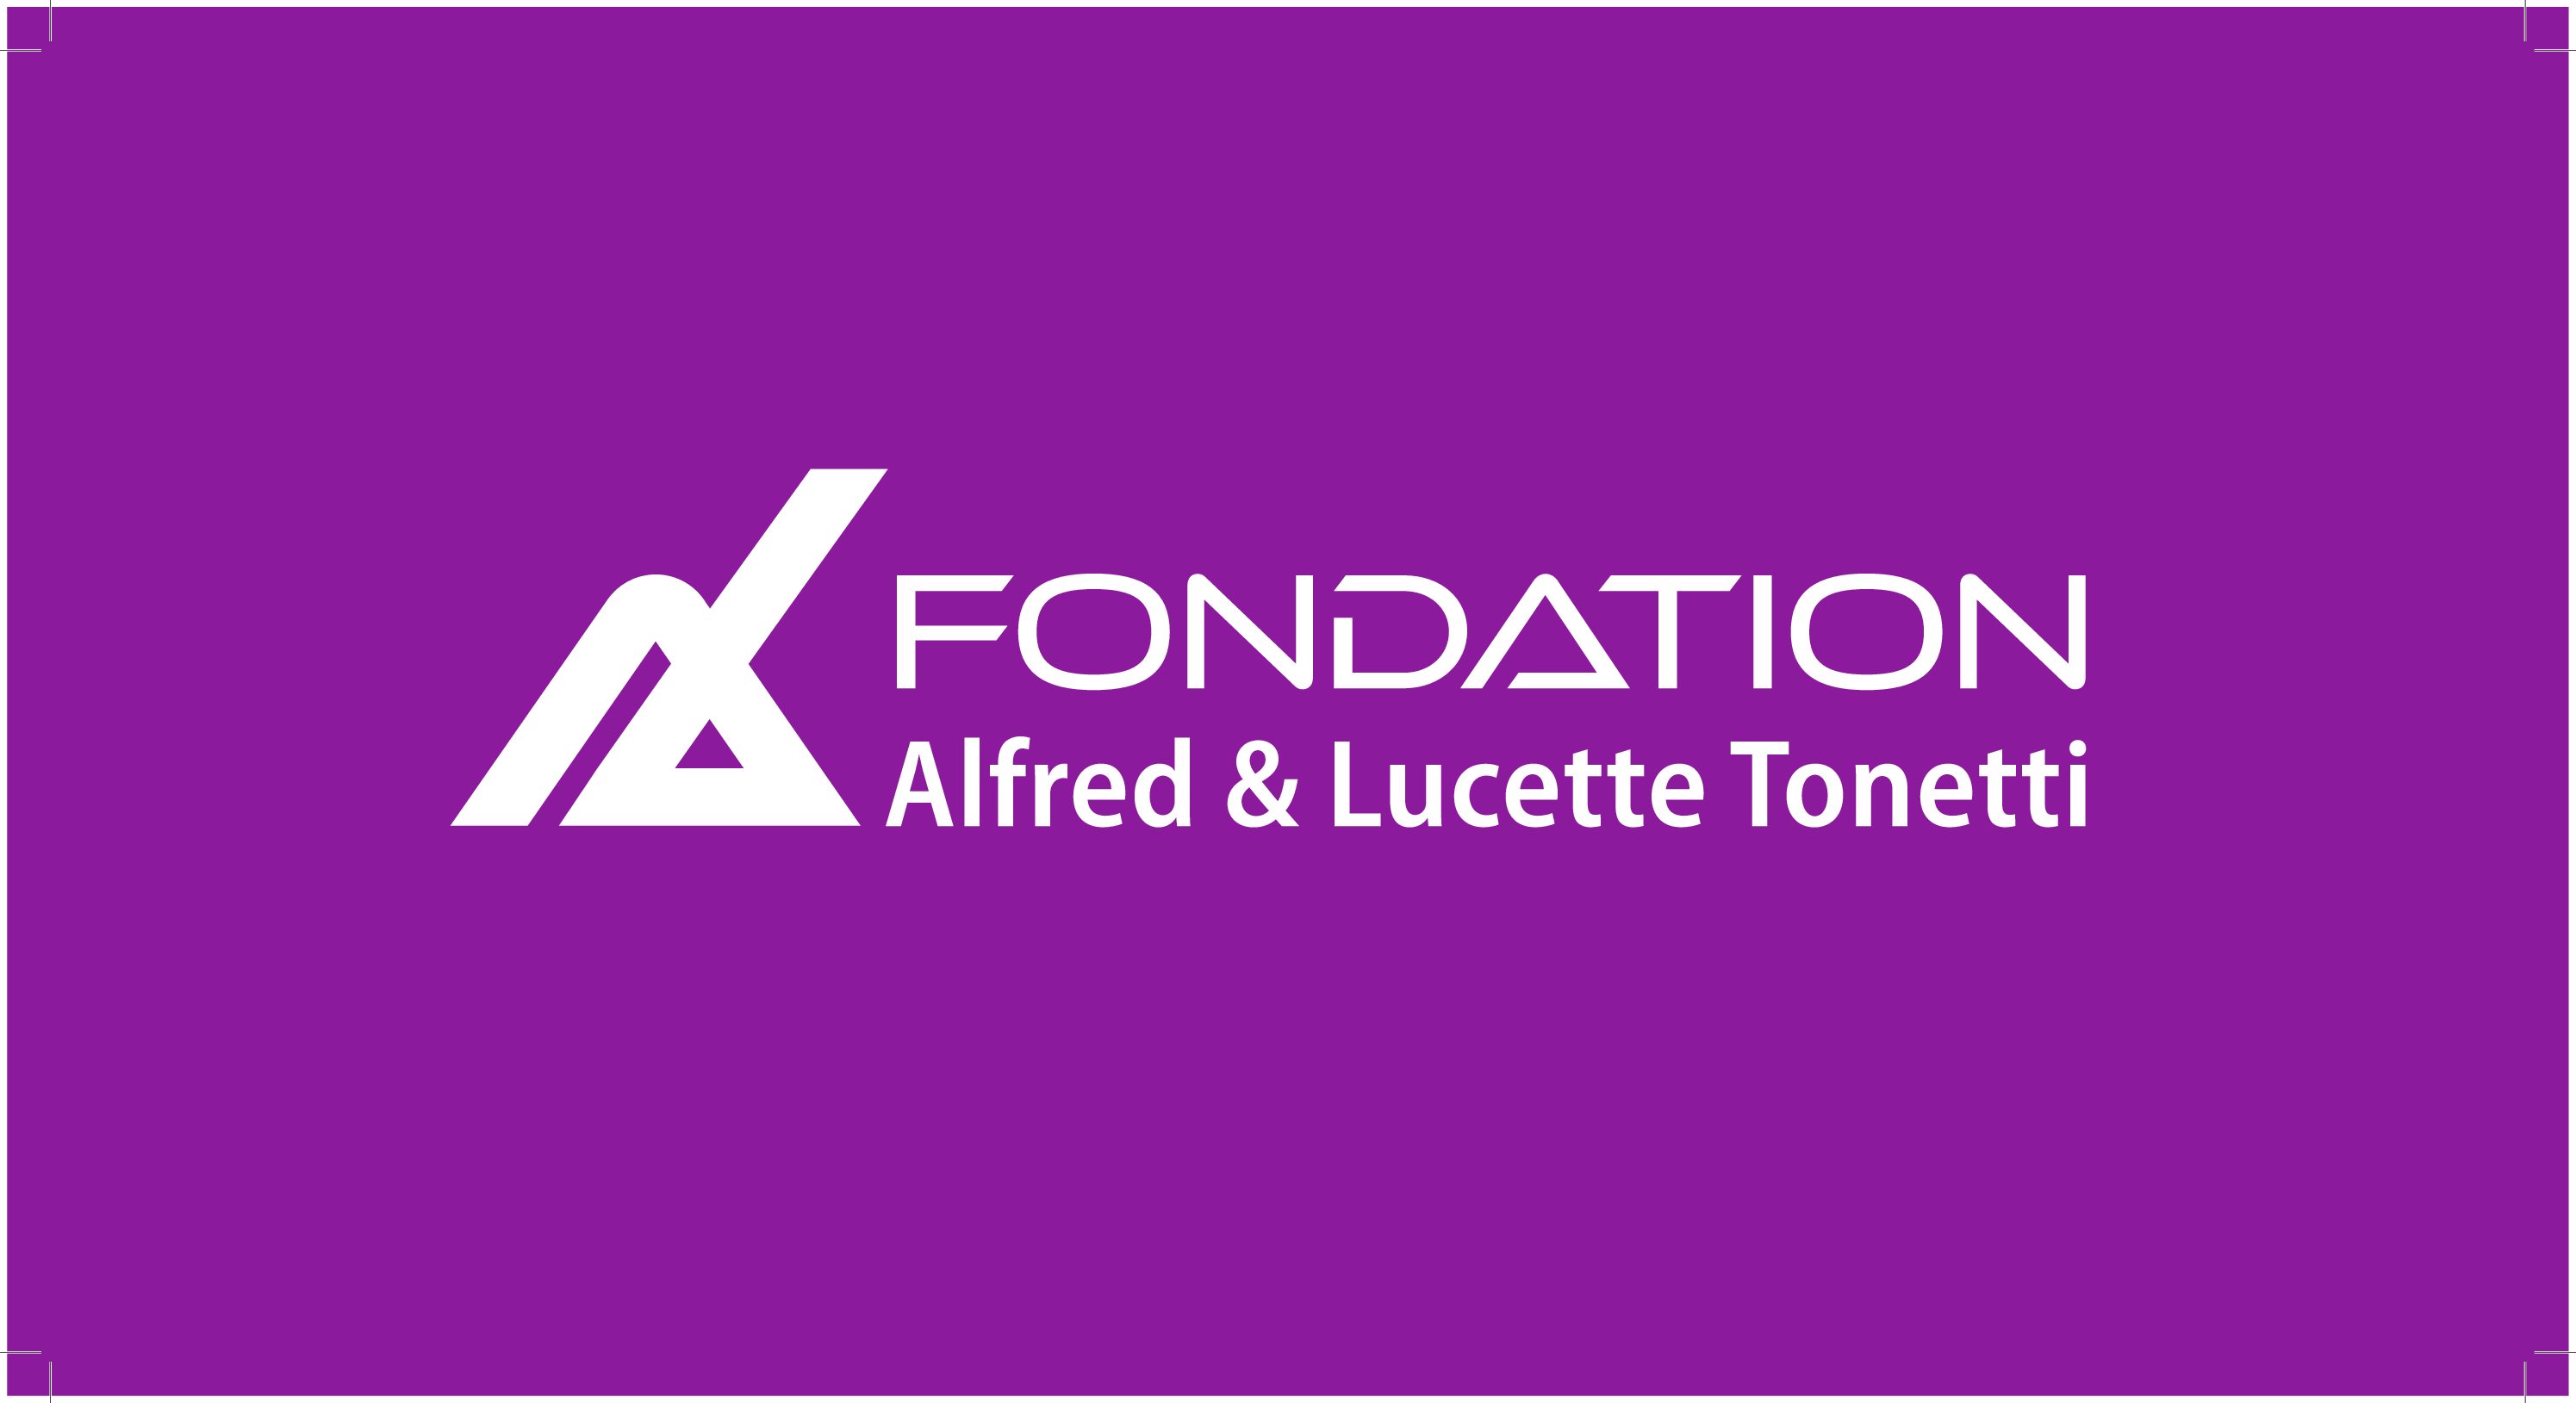 Fondation Alfred & Lucette Tonetti